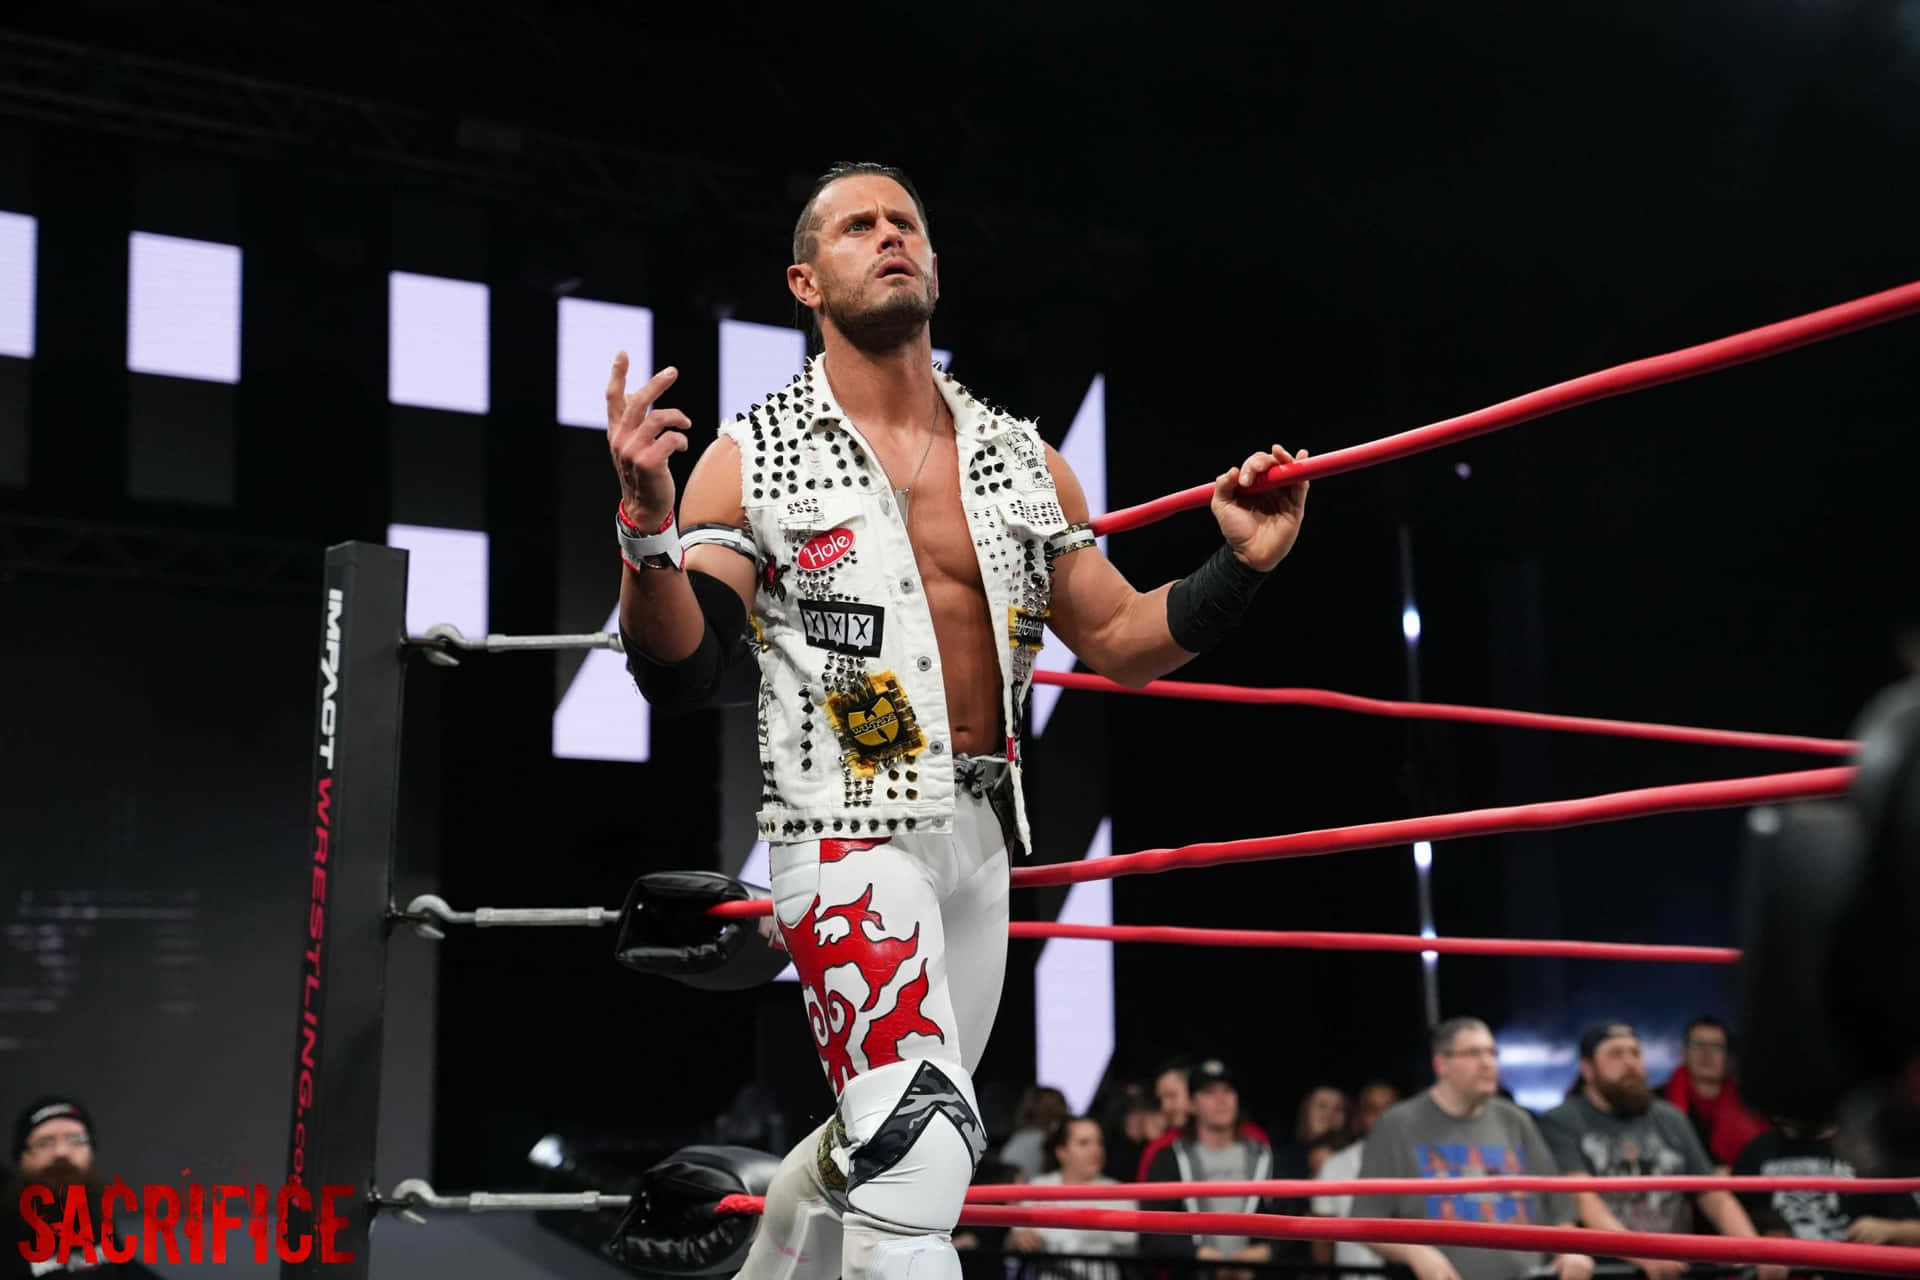 Professional Wrestler Alex Shelley Making a Grand Entrance at Impact Wrestling Sacrifice Wallpaper